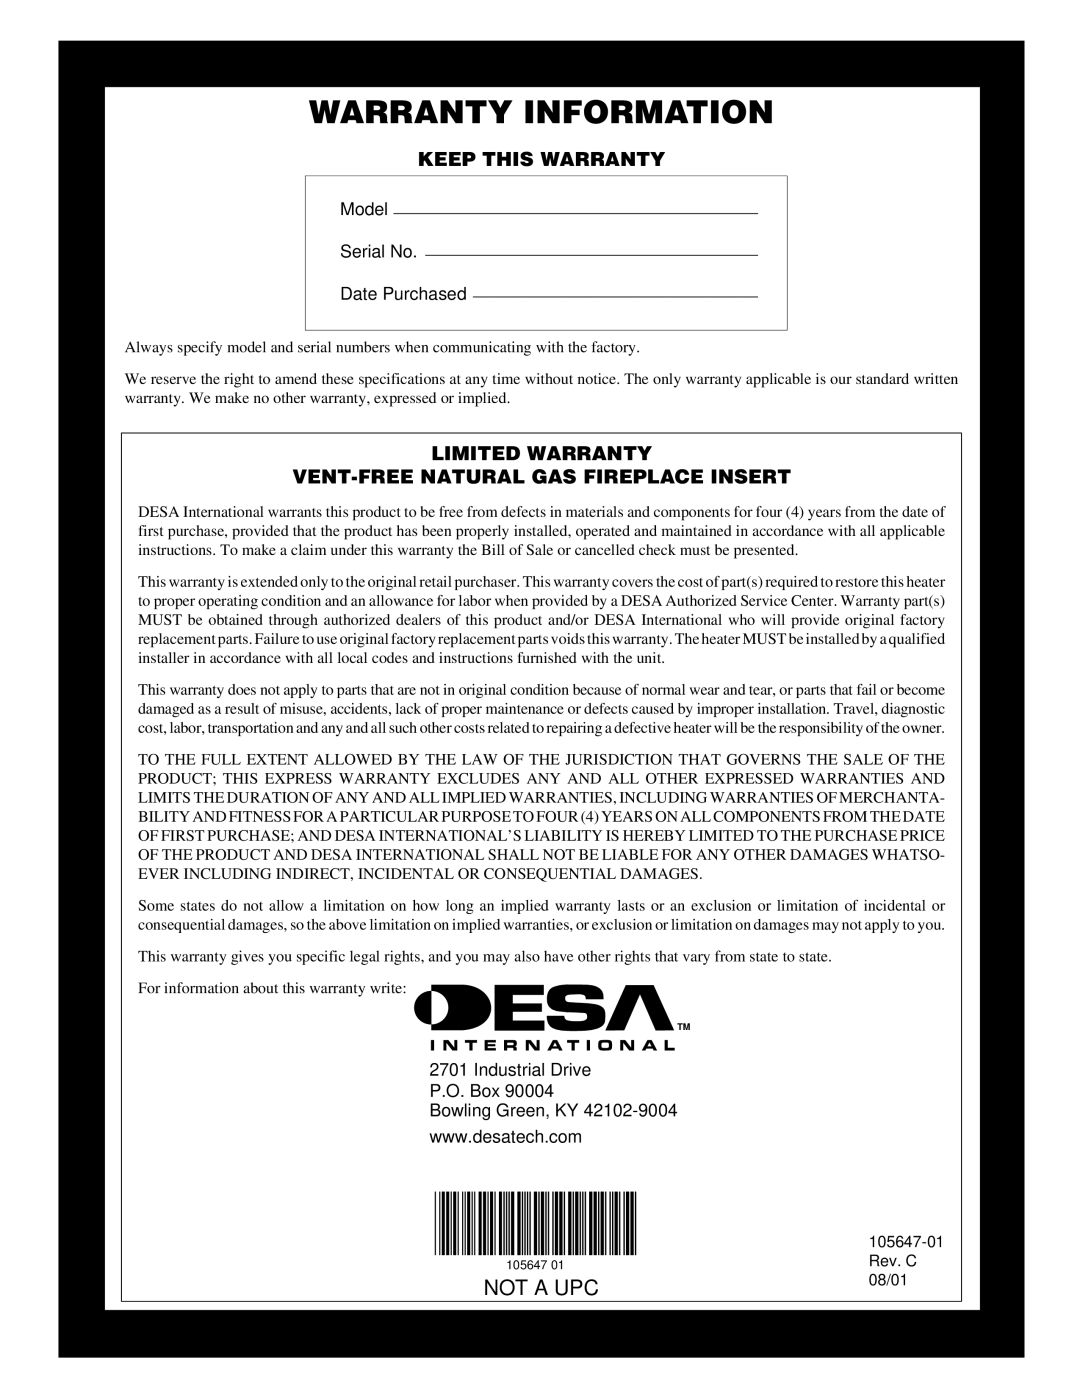 Desa VI33NR Warranty Information, Not A Upc, Keep This Warranty, Limited Warranty, Vent-Freenatural Gas Fireplace Insert 